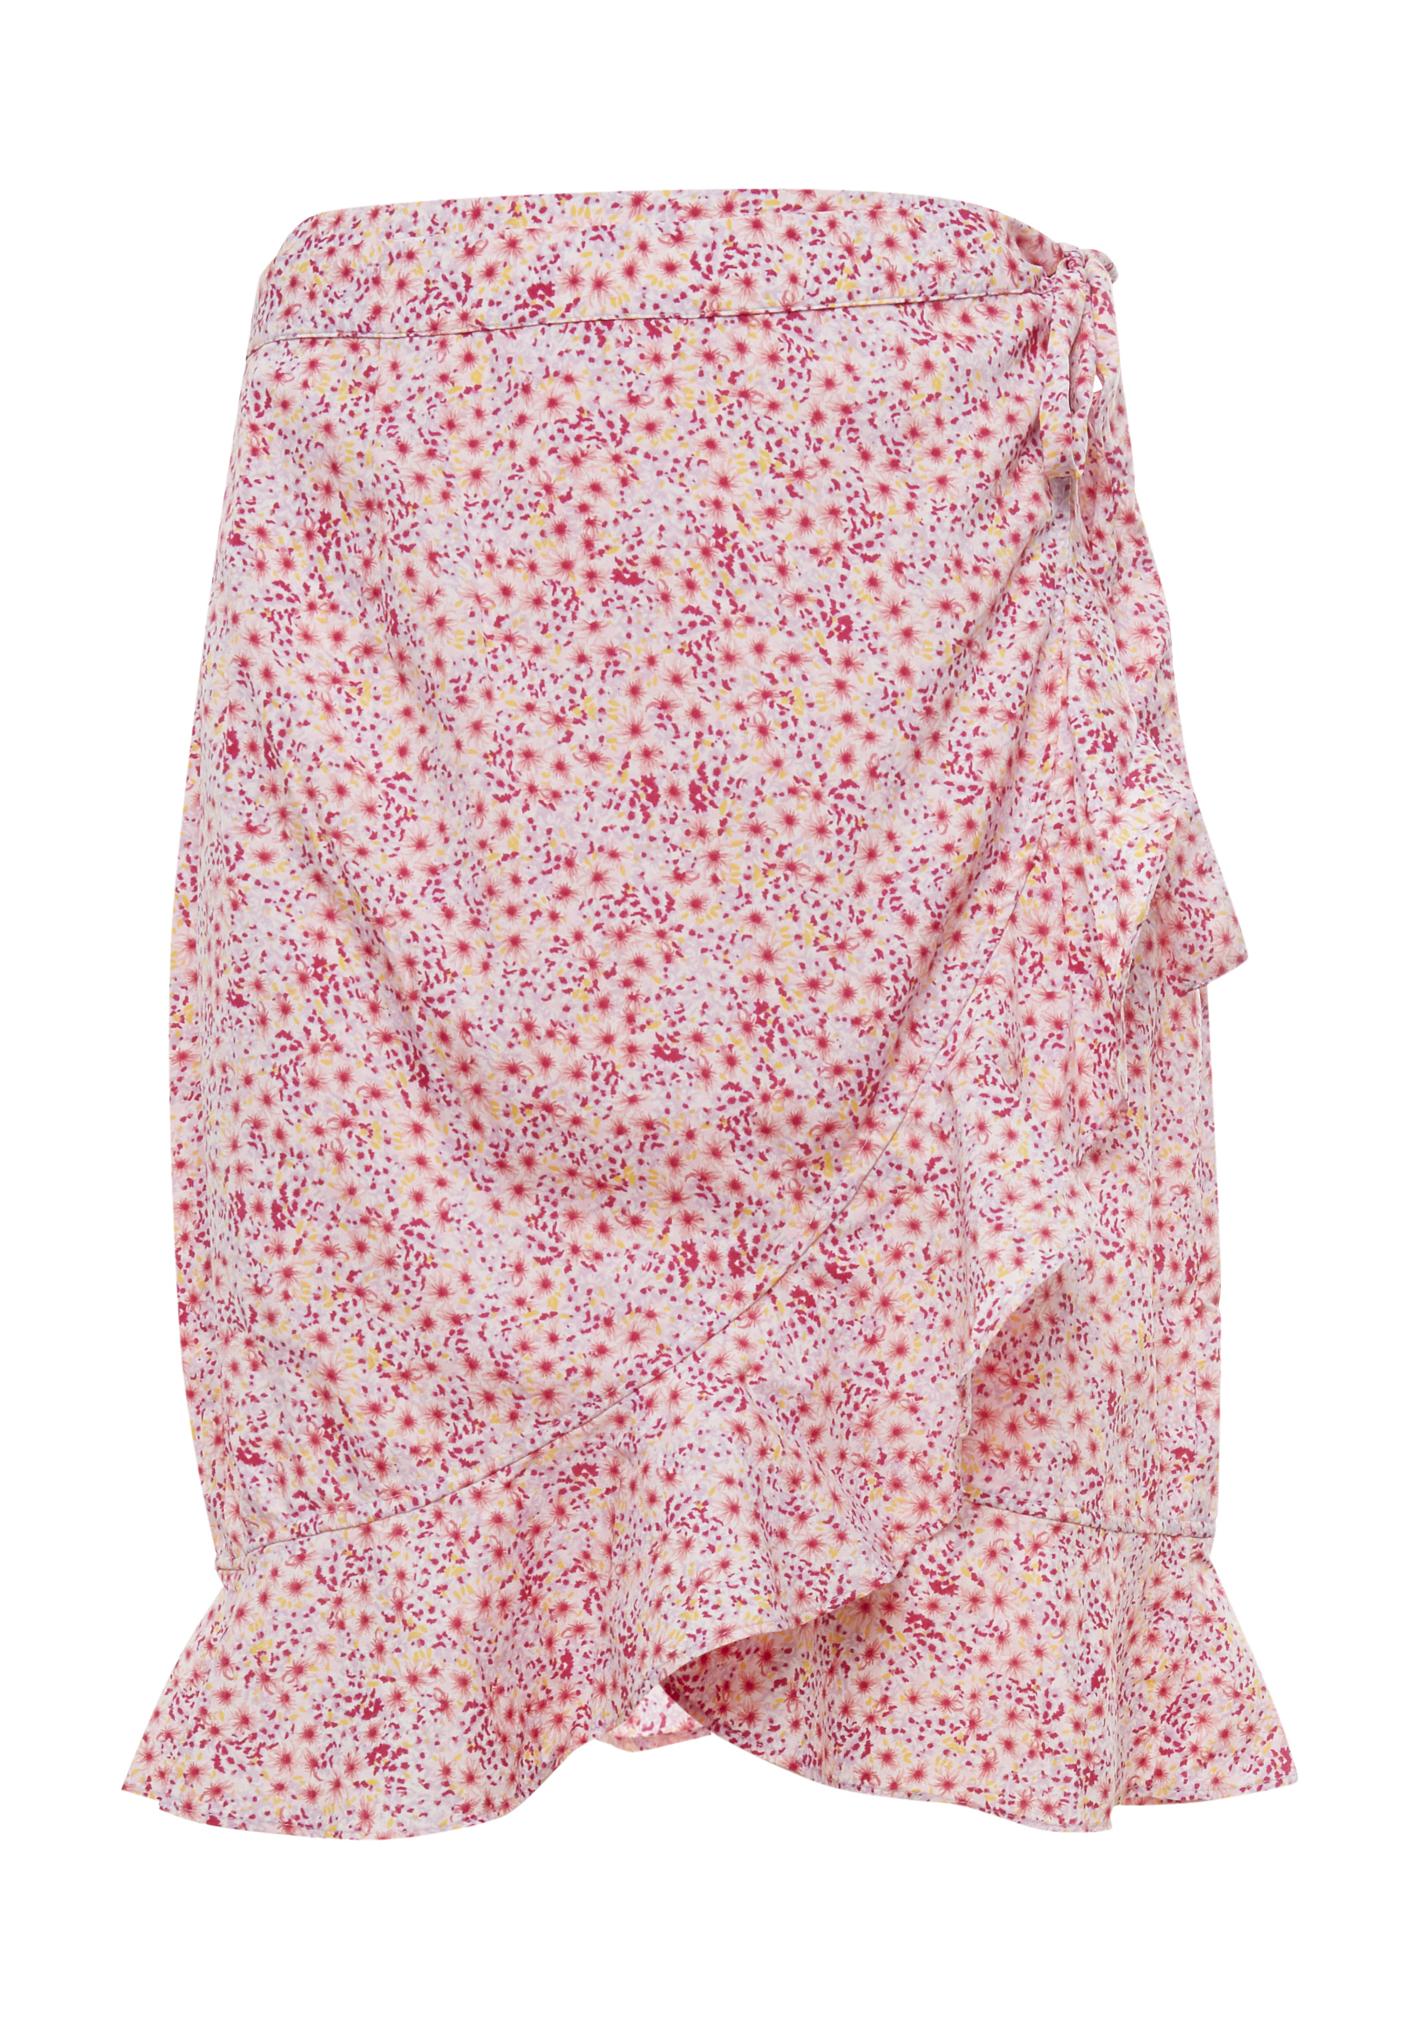 Efterforskning Klemme forretning Vero Moda Wrap Skirt in Pink Multi XS - L | DAILYLOOK